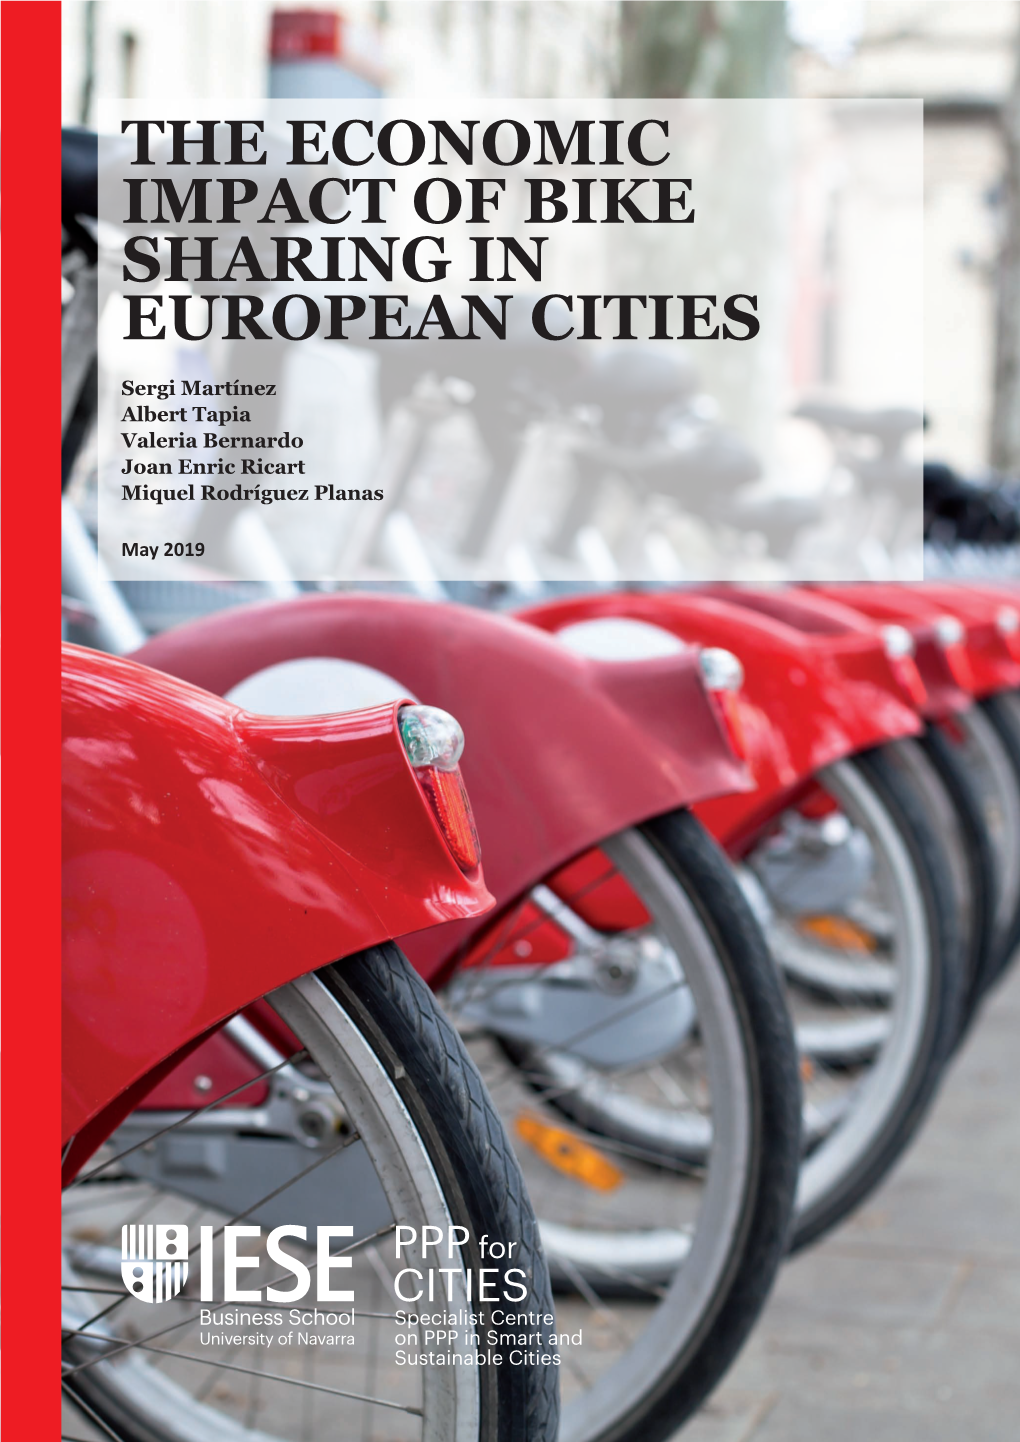 The Economic Impact of Bike Sharing in European Cities